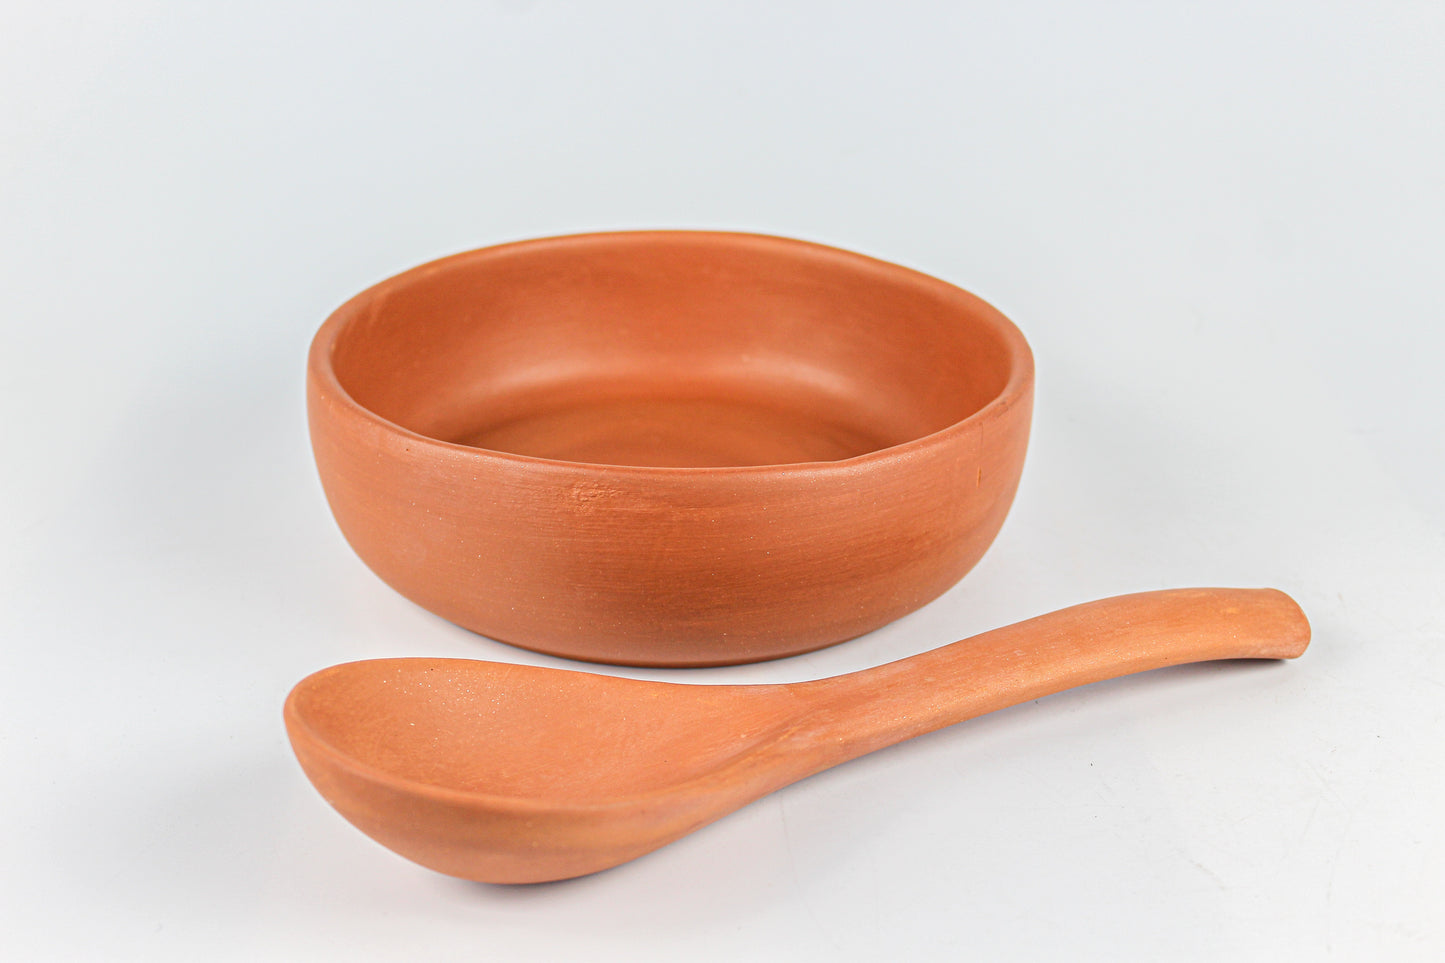 Terracotta Handmade Serving Bowl Home N Earth